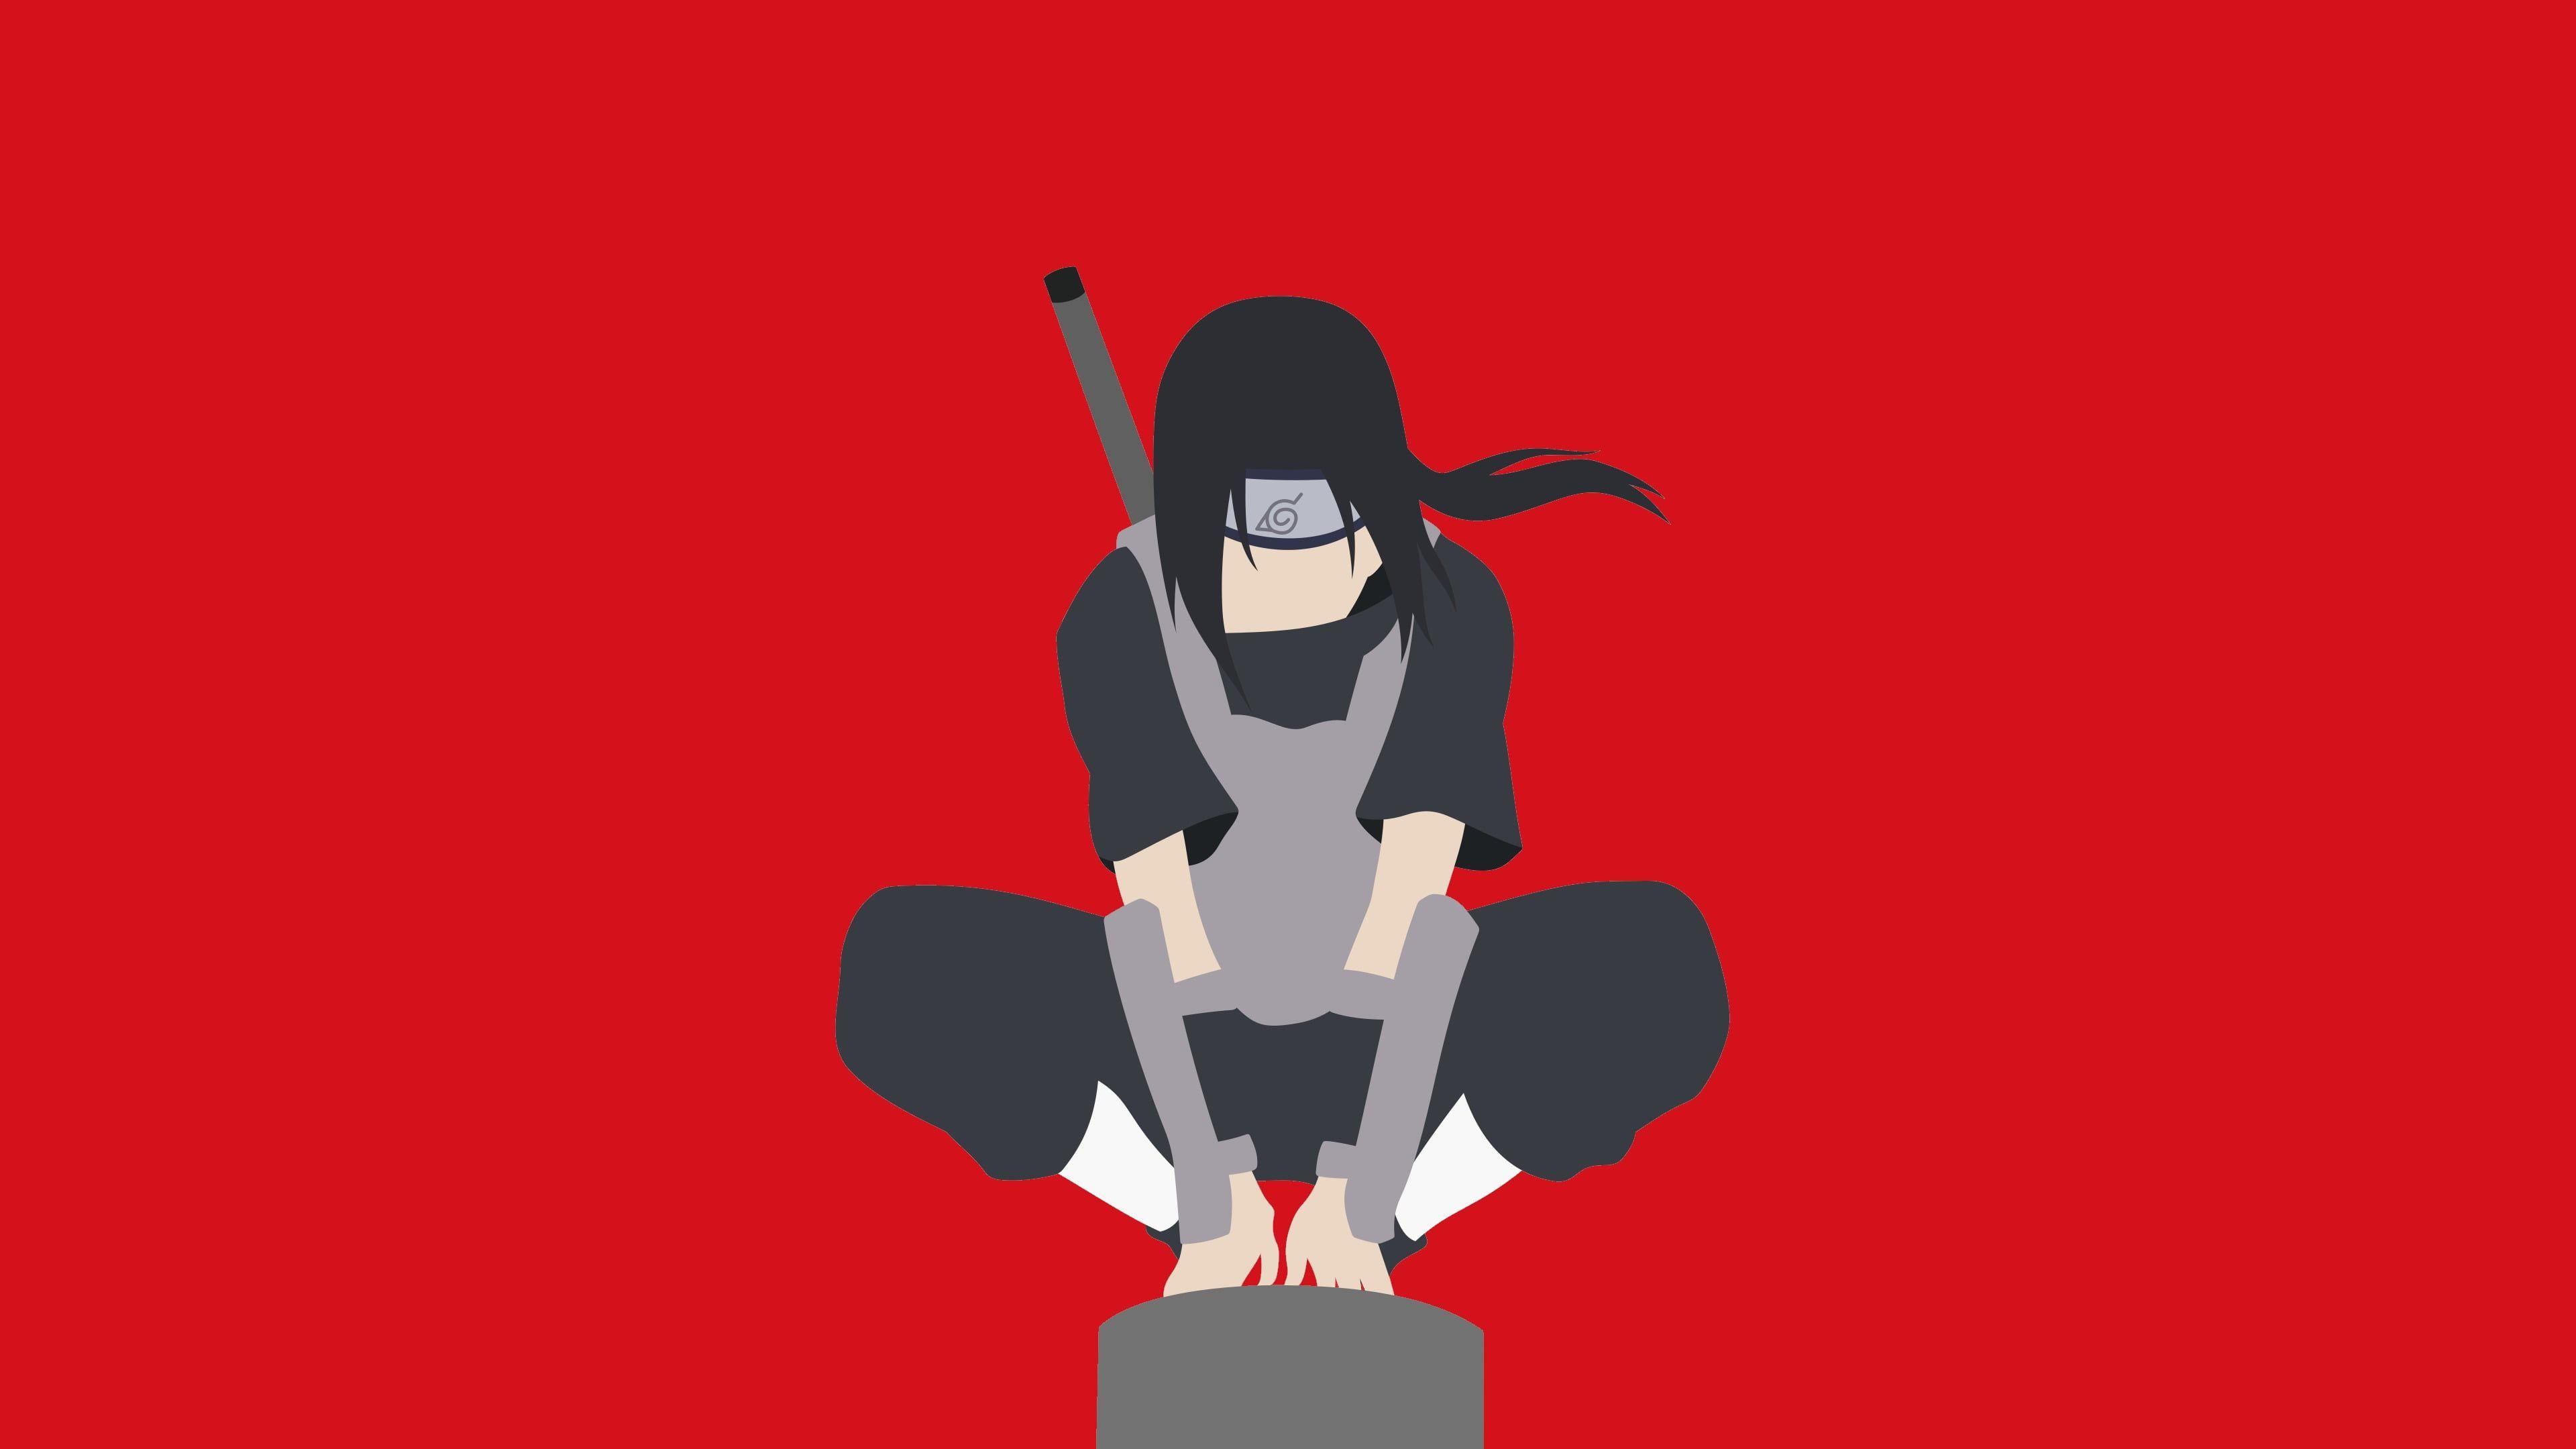 Hình minh họa ninja 3840x2160 #anime Naruto Shippuuden #minimalism Uchiha Itachi K # hình nền #hdwallpaper #desktop năm 2020. Hình minh họa ninja, Itachi, Itachi uchiha